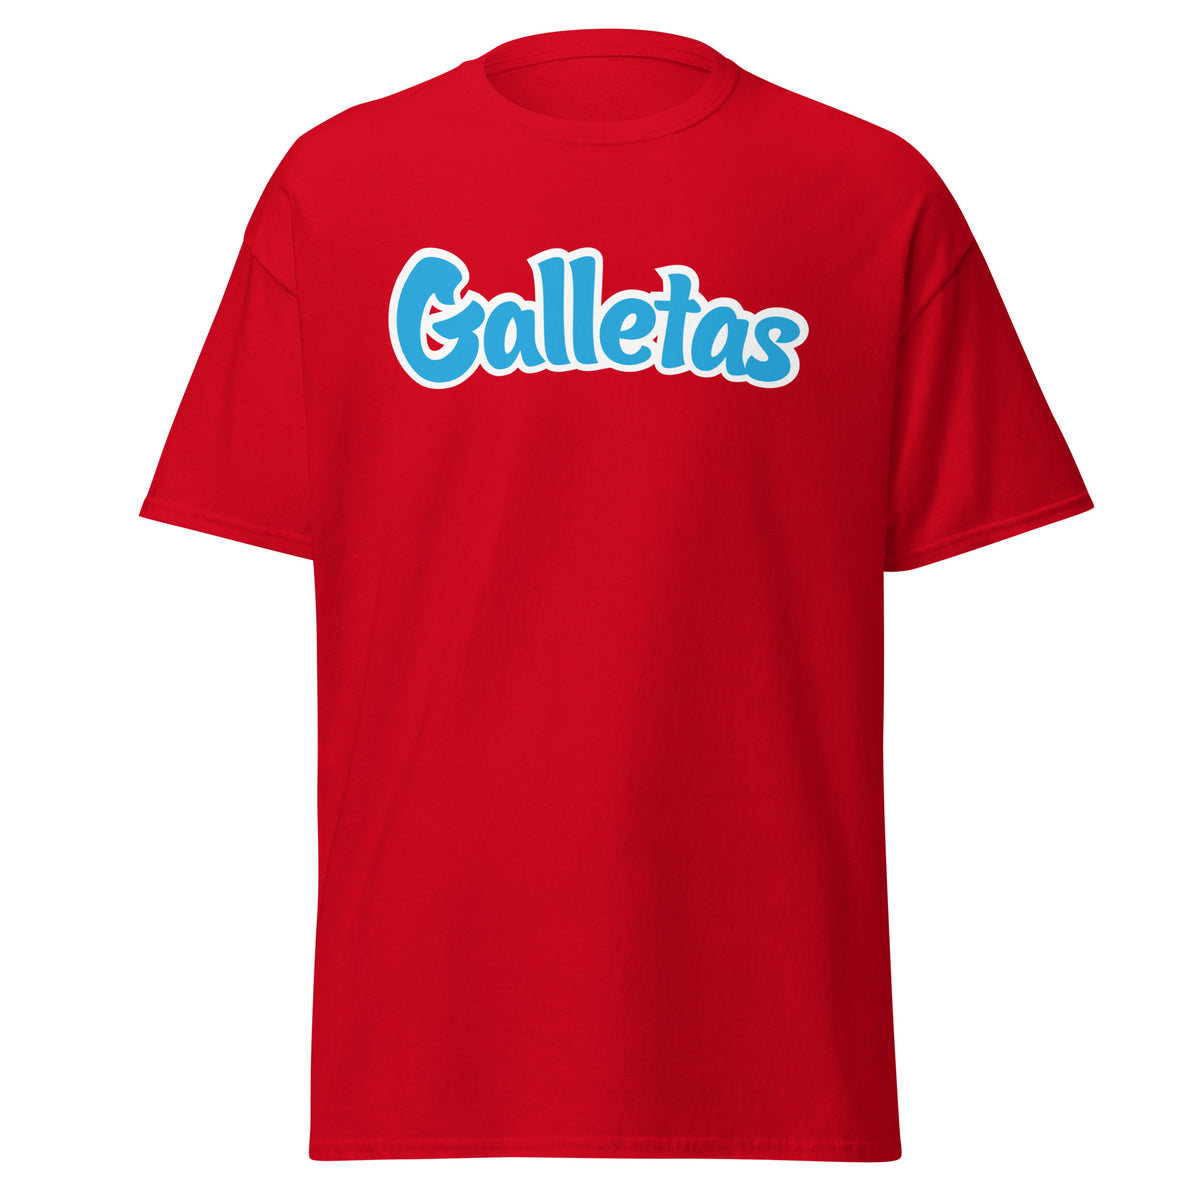 Galletas T-Shirt (Cookies)